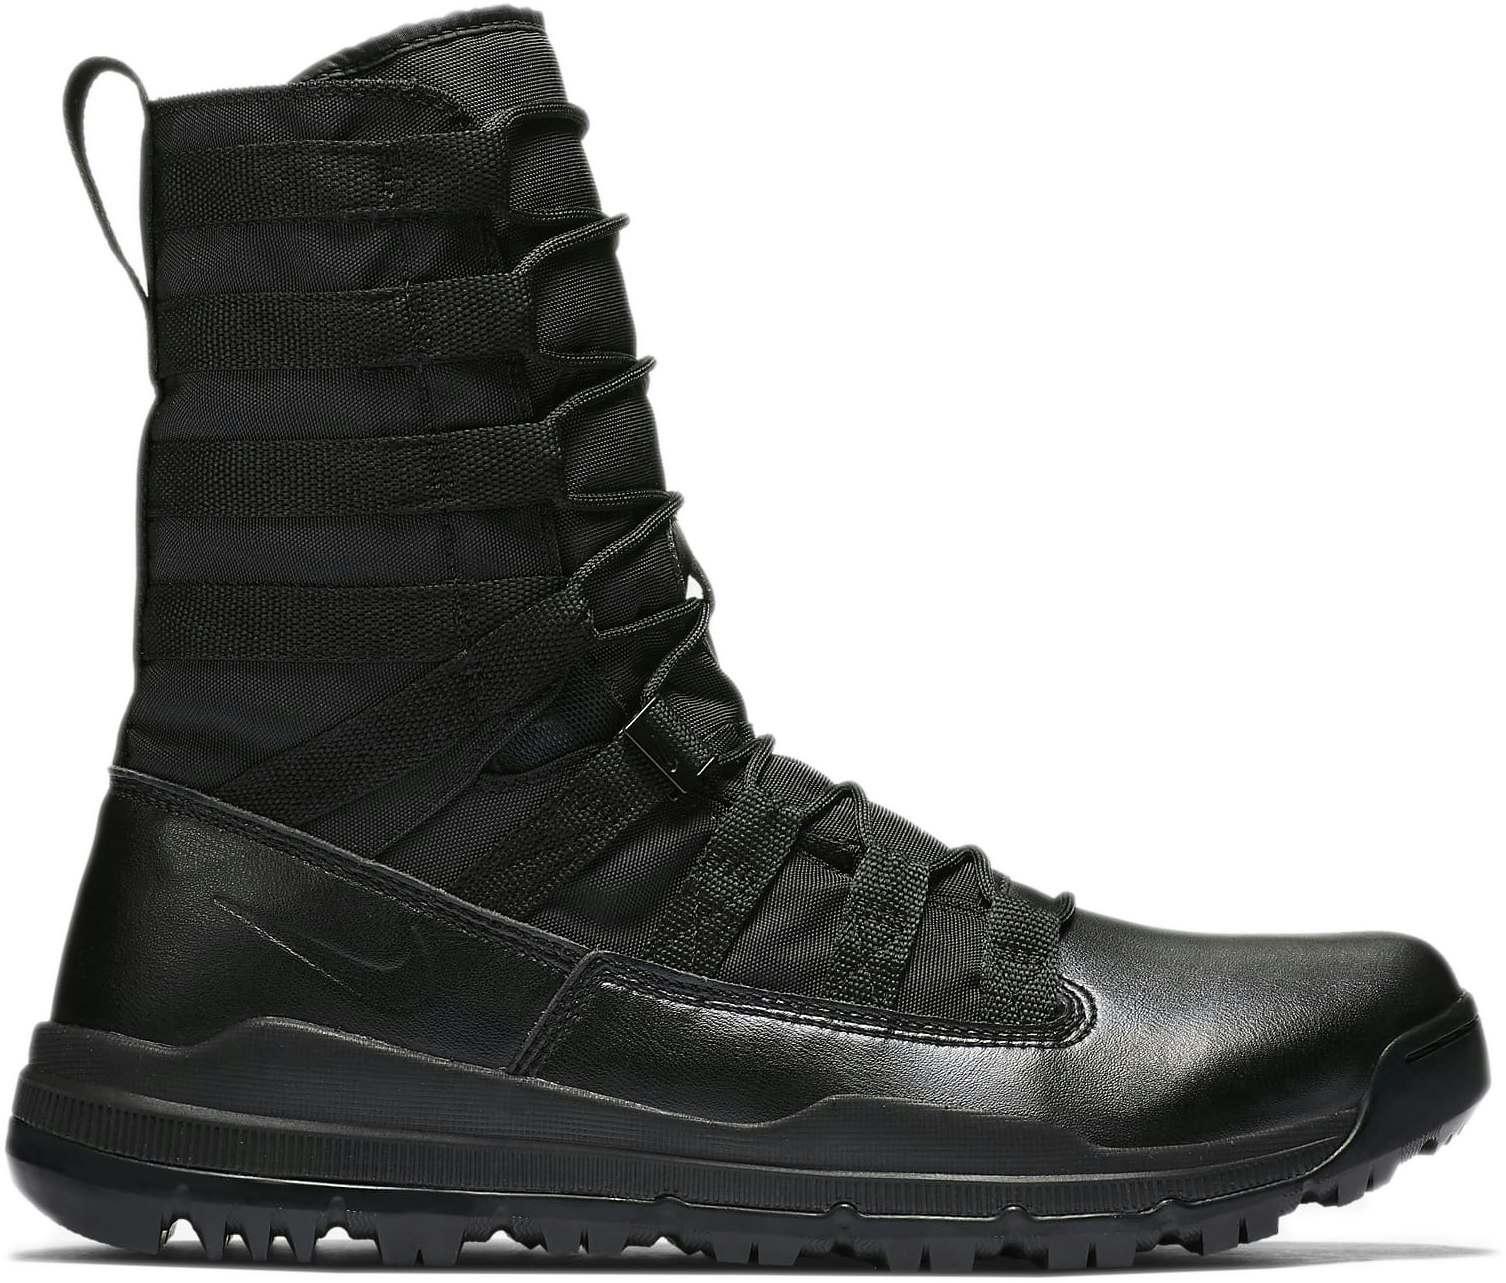 Nike SFB Gen 2 8 Inch Tactical Boot 'Triple Black' 922474-001 - 922474 ...